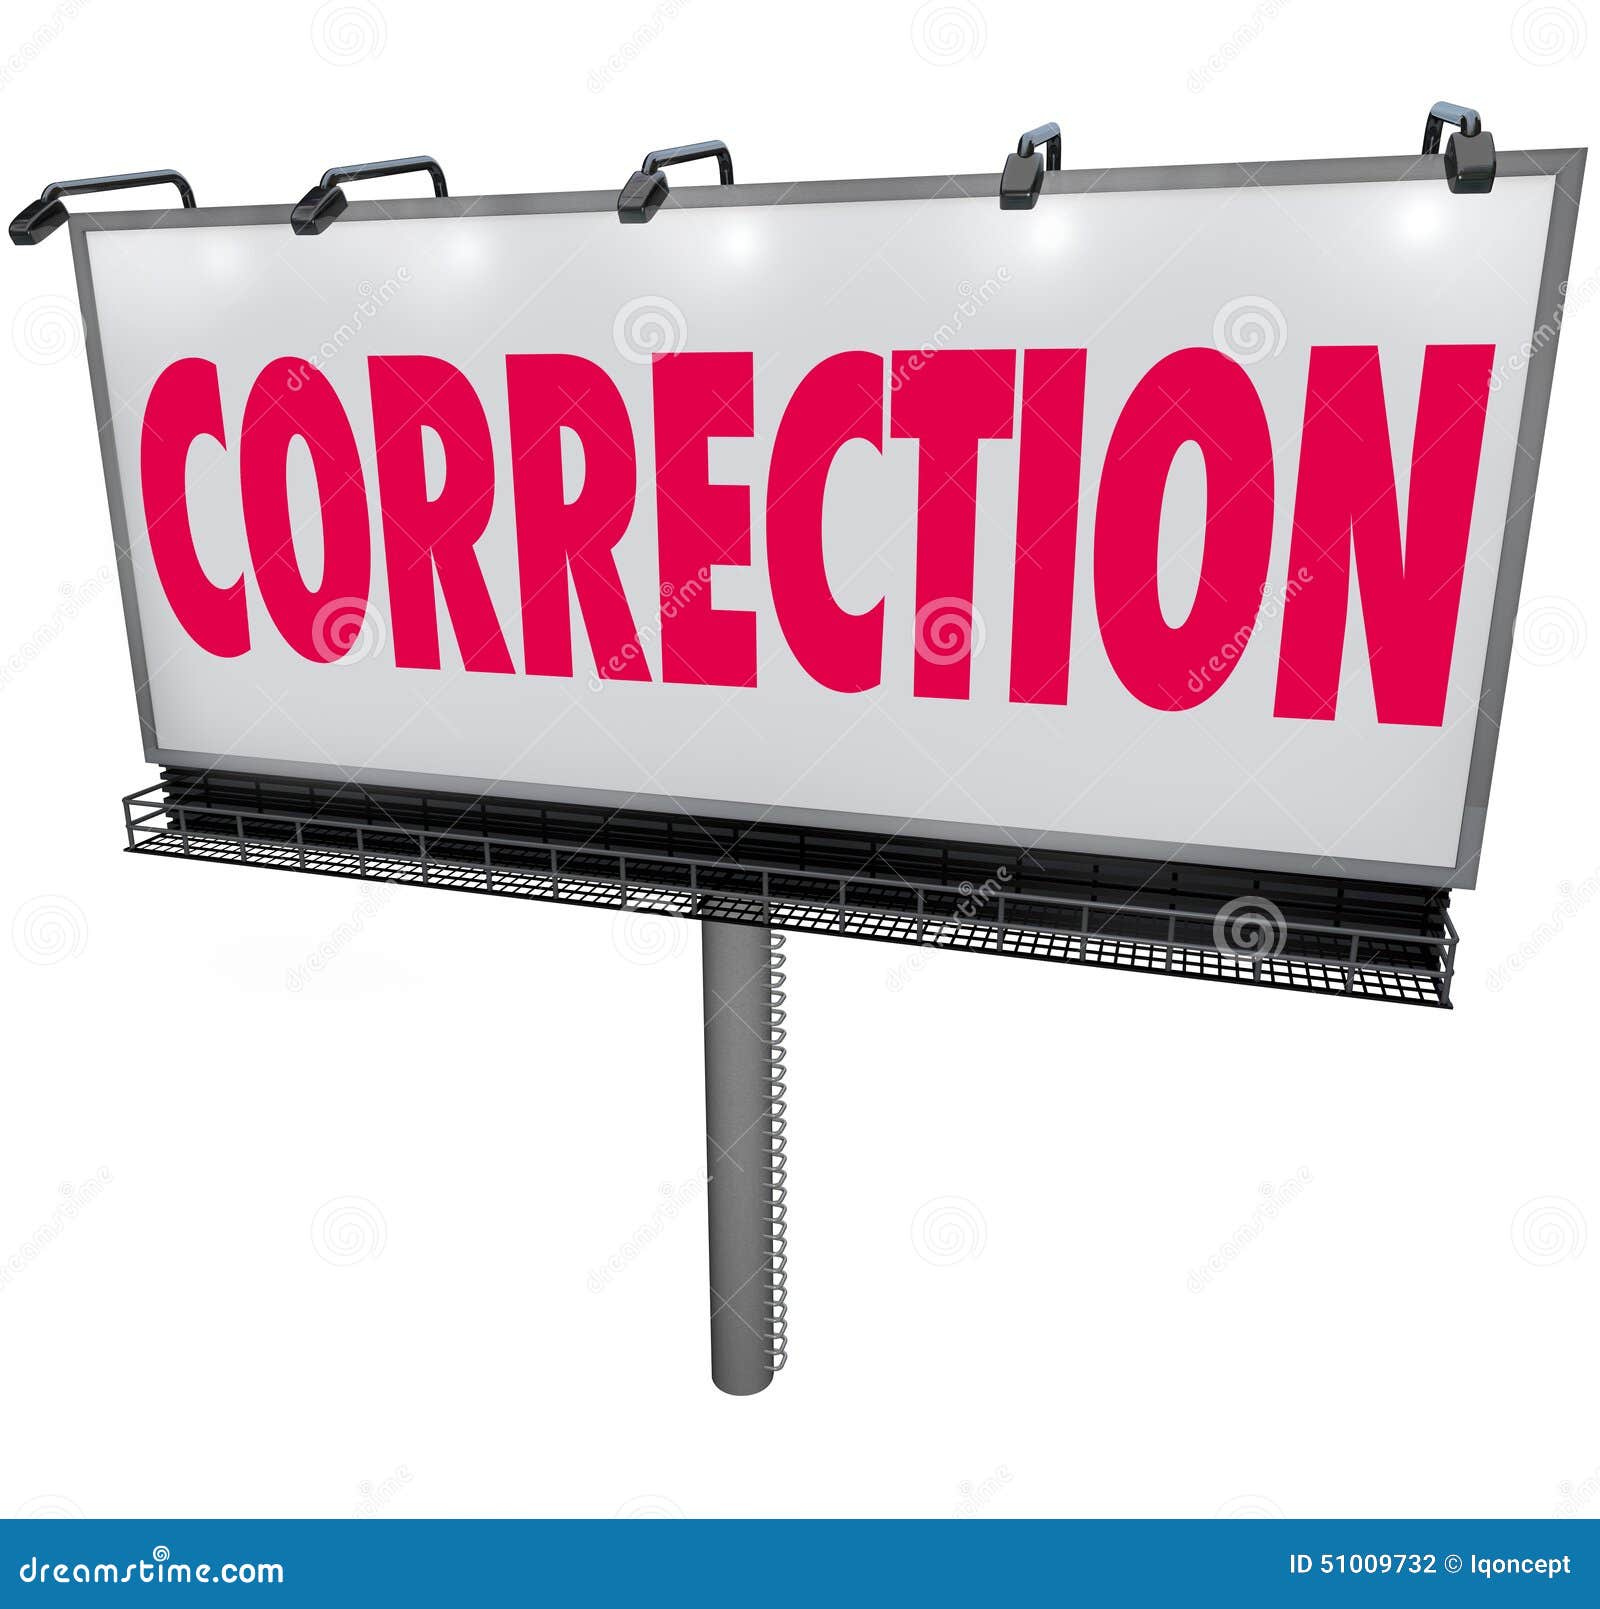 correction-word-billboard-revising-updating-mistake-error-stock